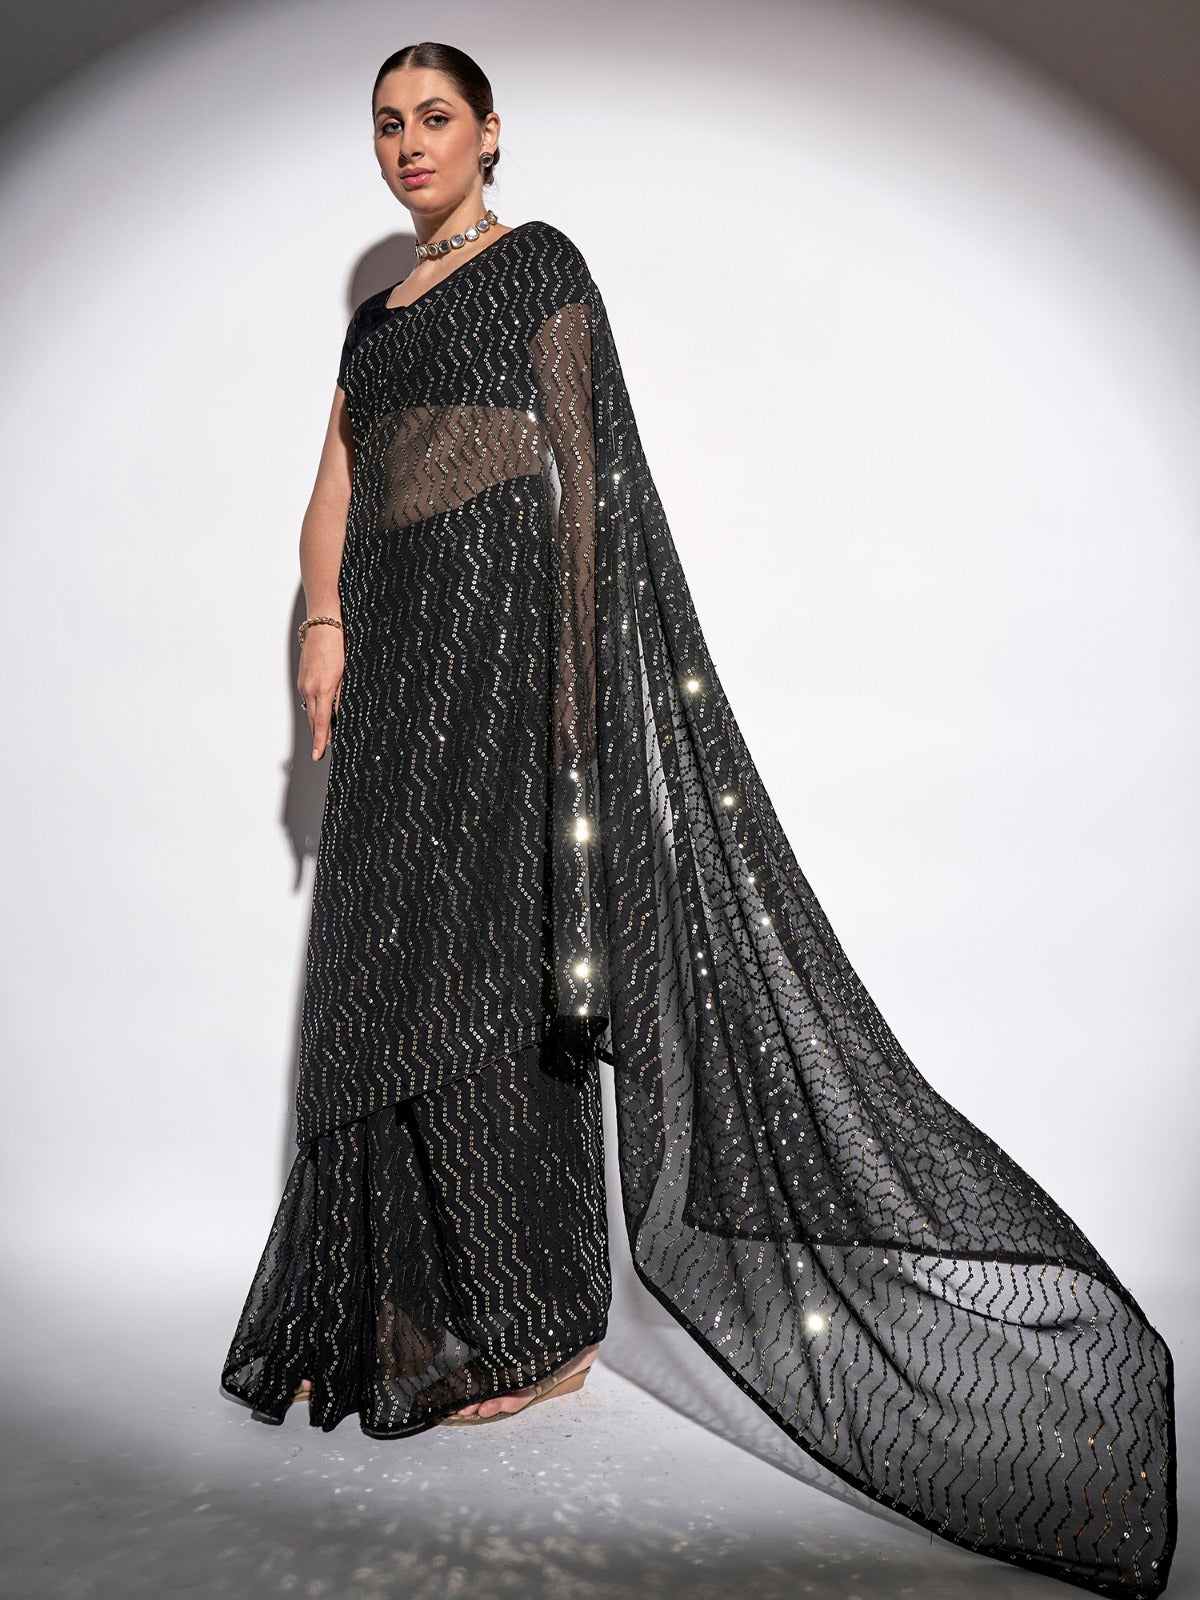 Women's Seqaunce Worked Designer Saree Collection - Dwija Fashion